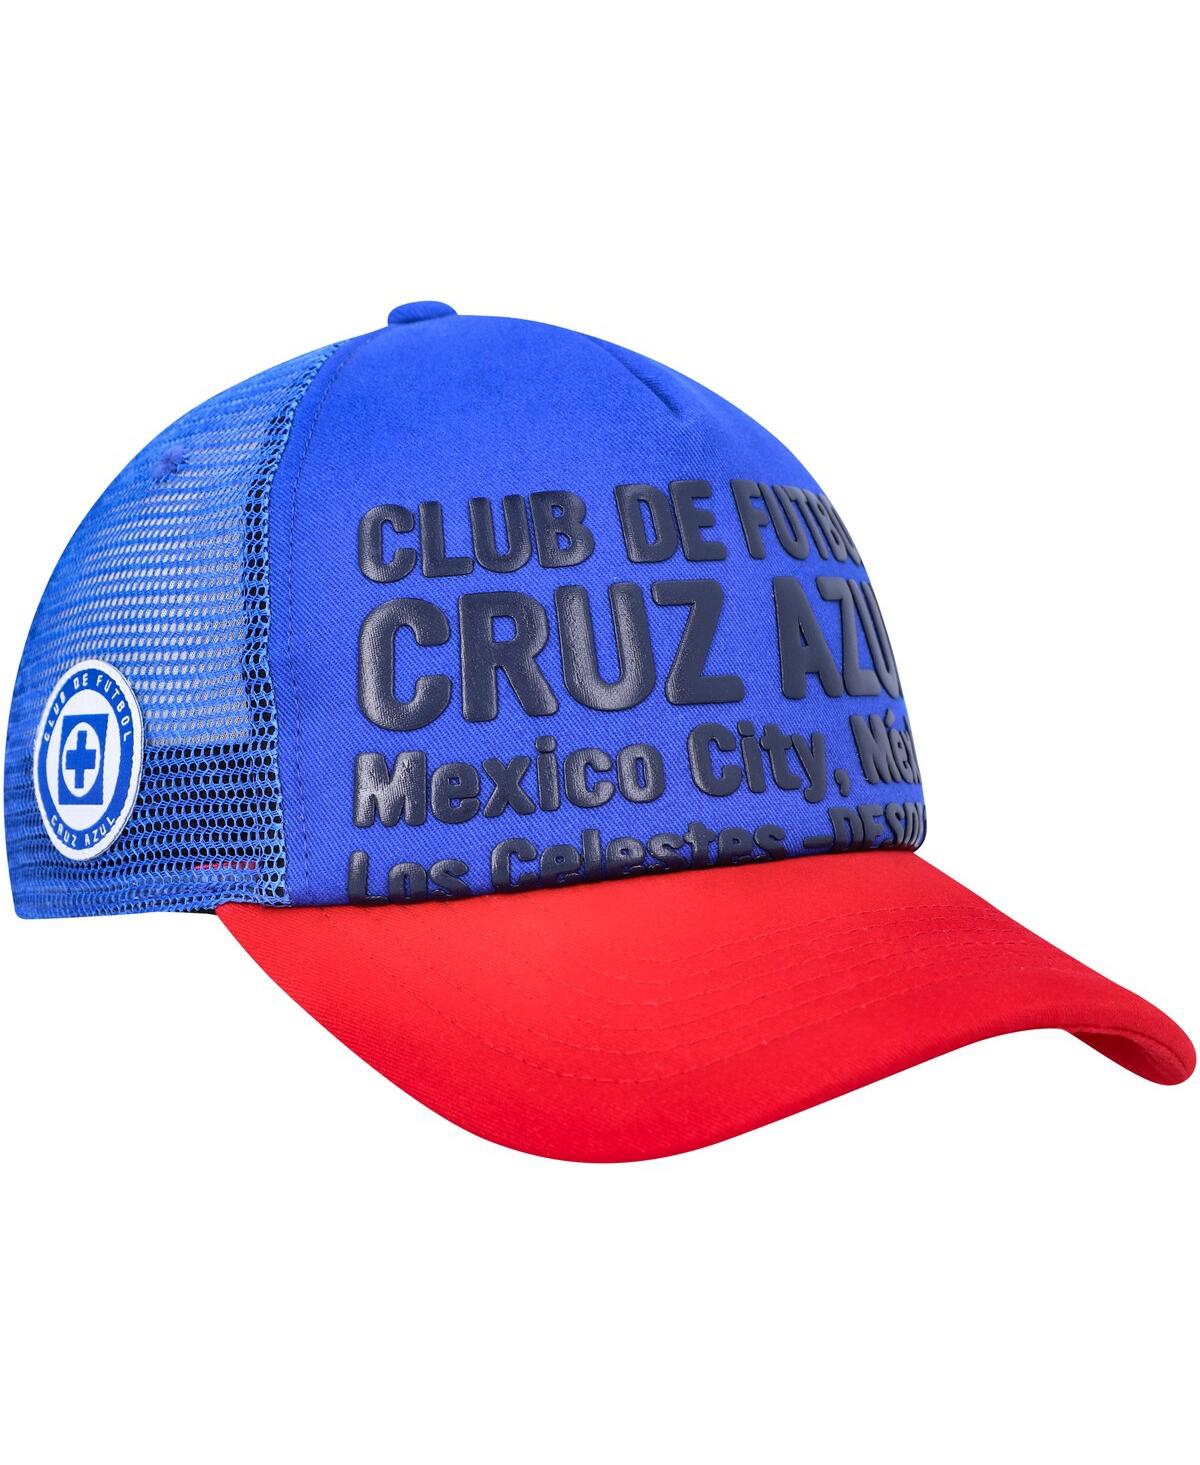 Fan Ink Men's Blue Cruz Azul Club Gold Adjustable Hat